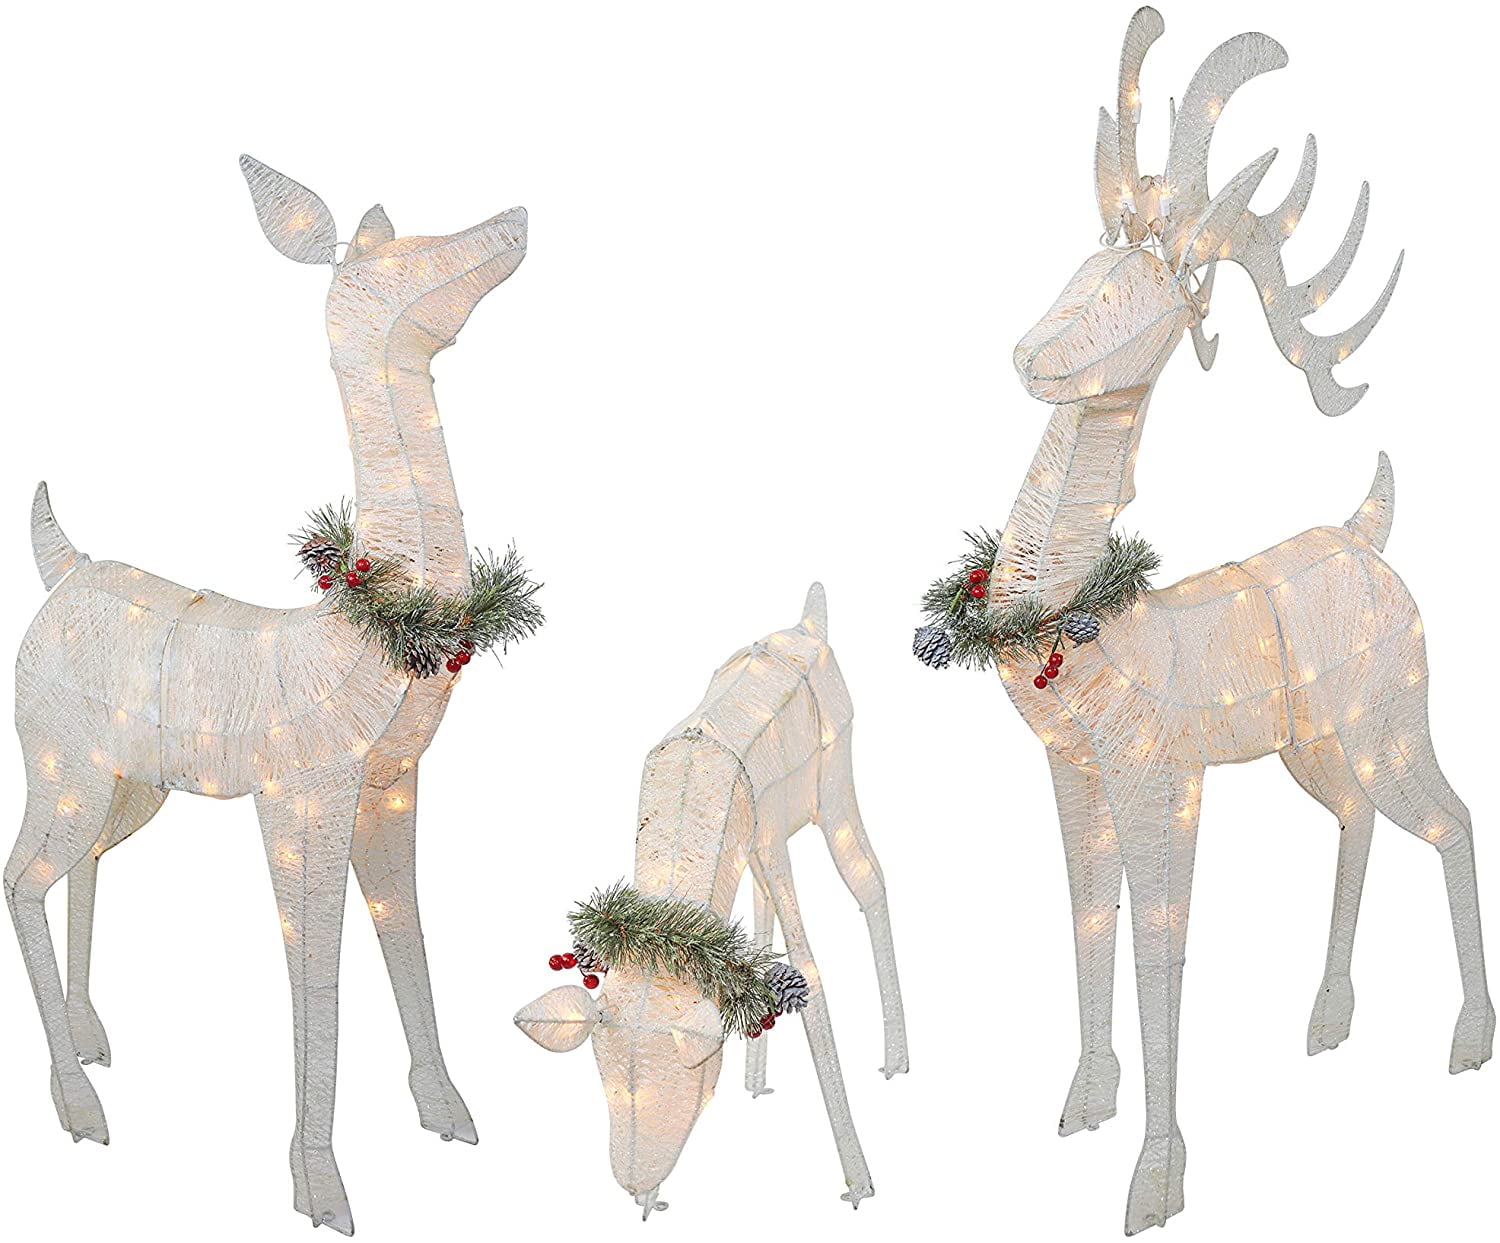 3-Piece Iridescent Reindeer Family - Lighted Deer Set - 210 Lights 52 Buck  44 Doe 28 Fawn - Large Deer Family for Indoor or Outdoor Christmas